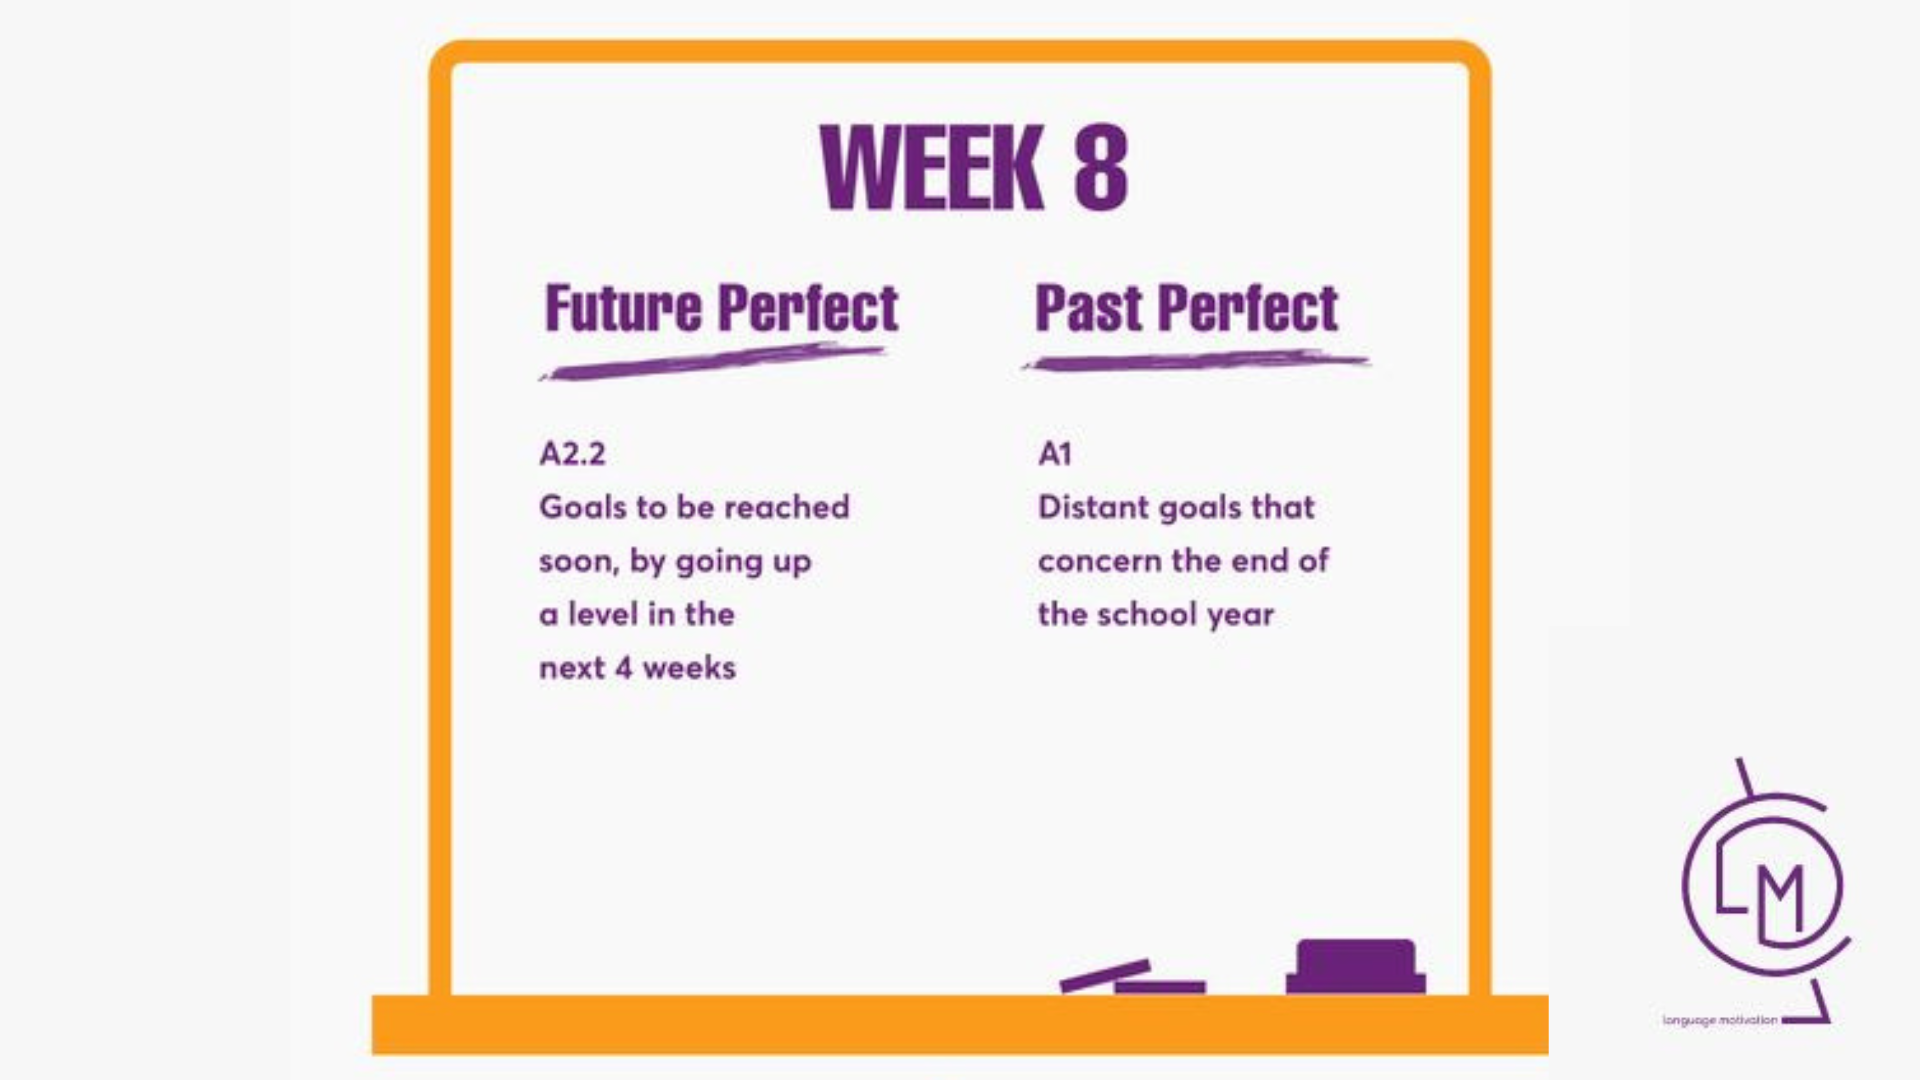 Future Perfect vs Past Perfect -> Week 8